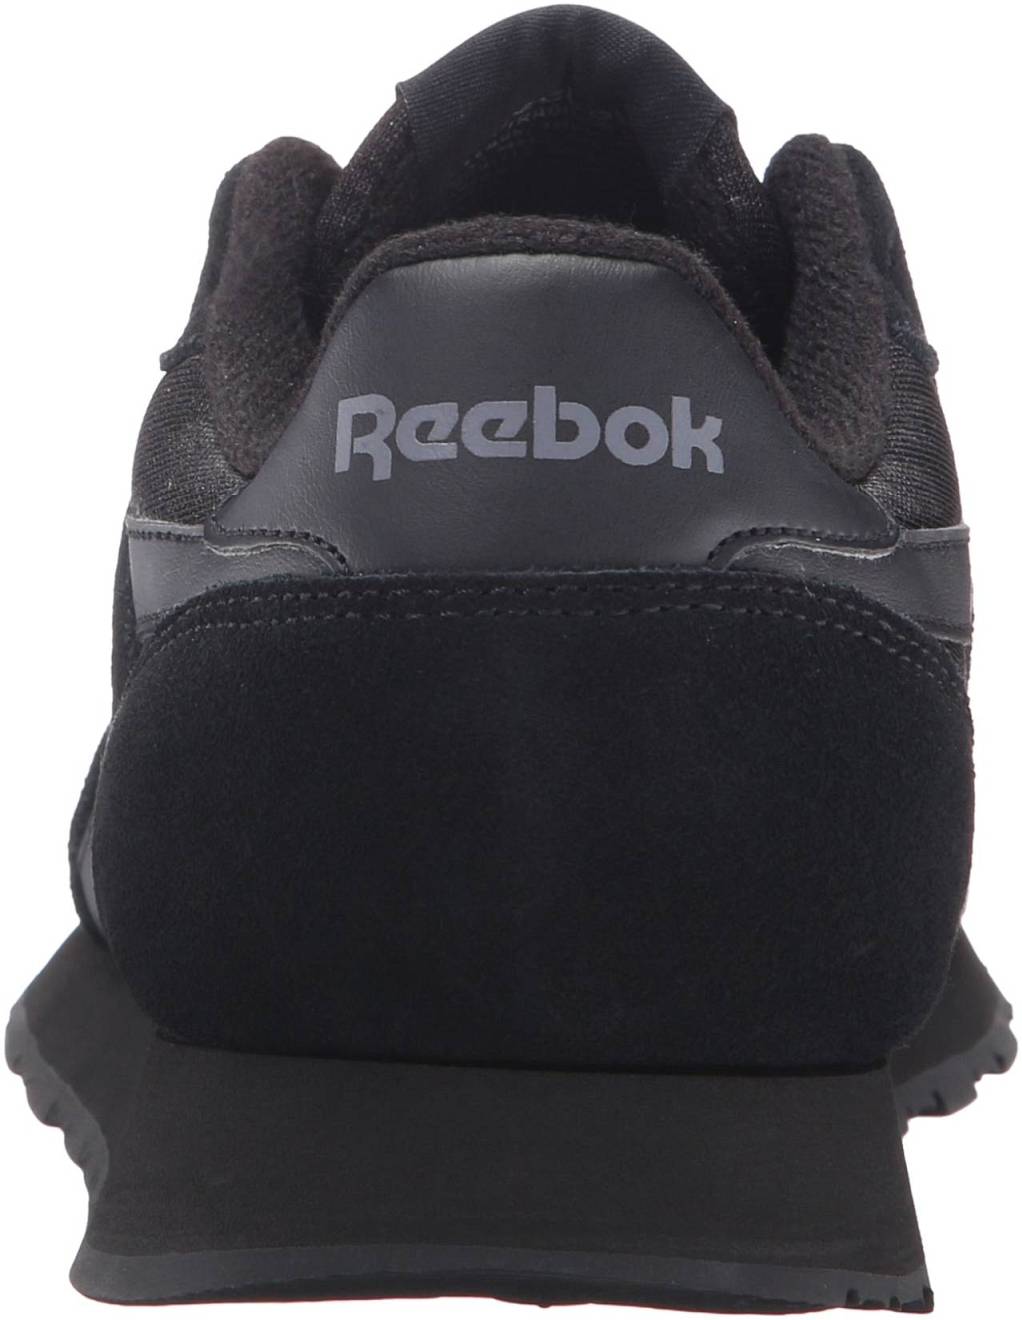 Reebok Royal Nylon – Shoes Reviews & Reasons To Buy